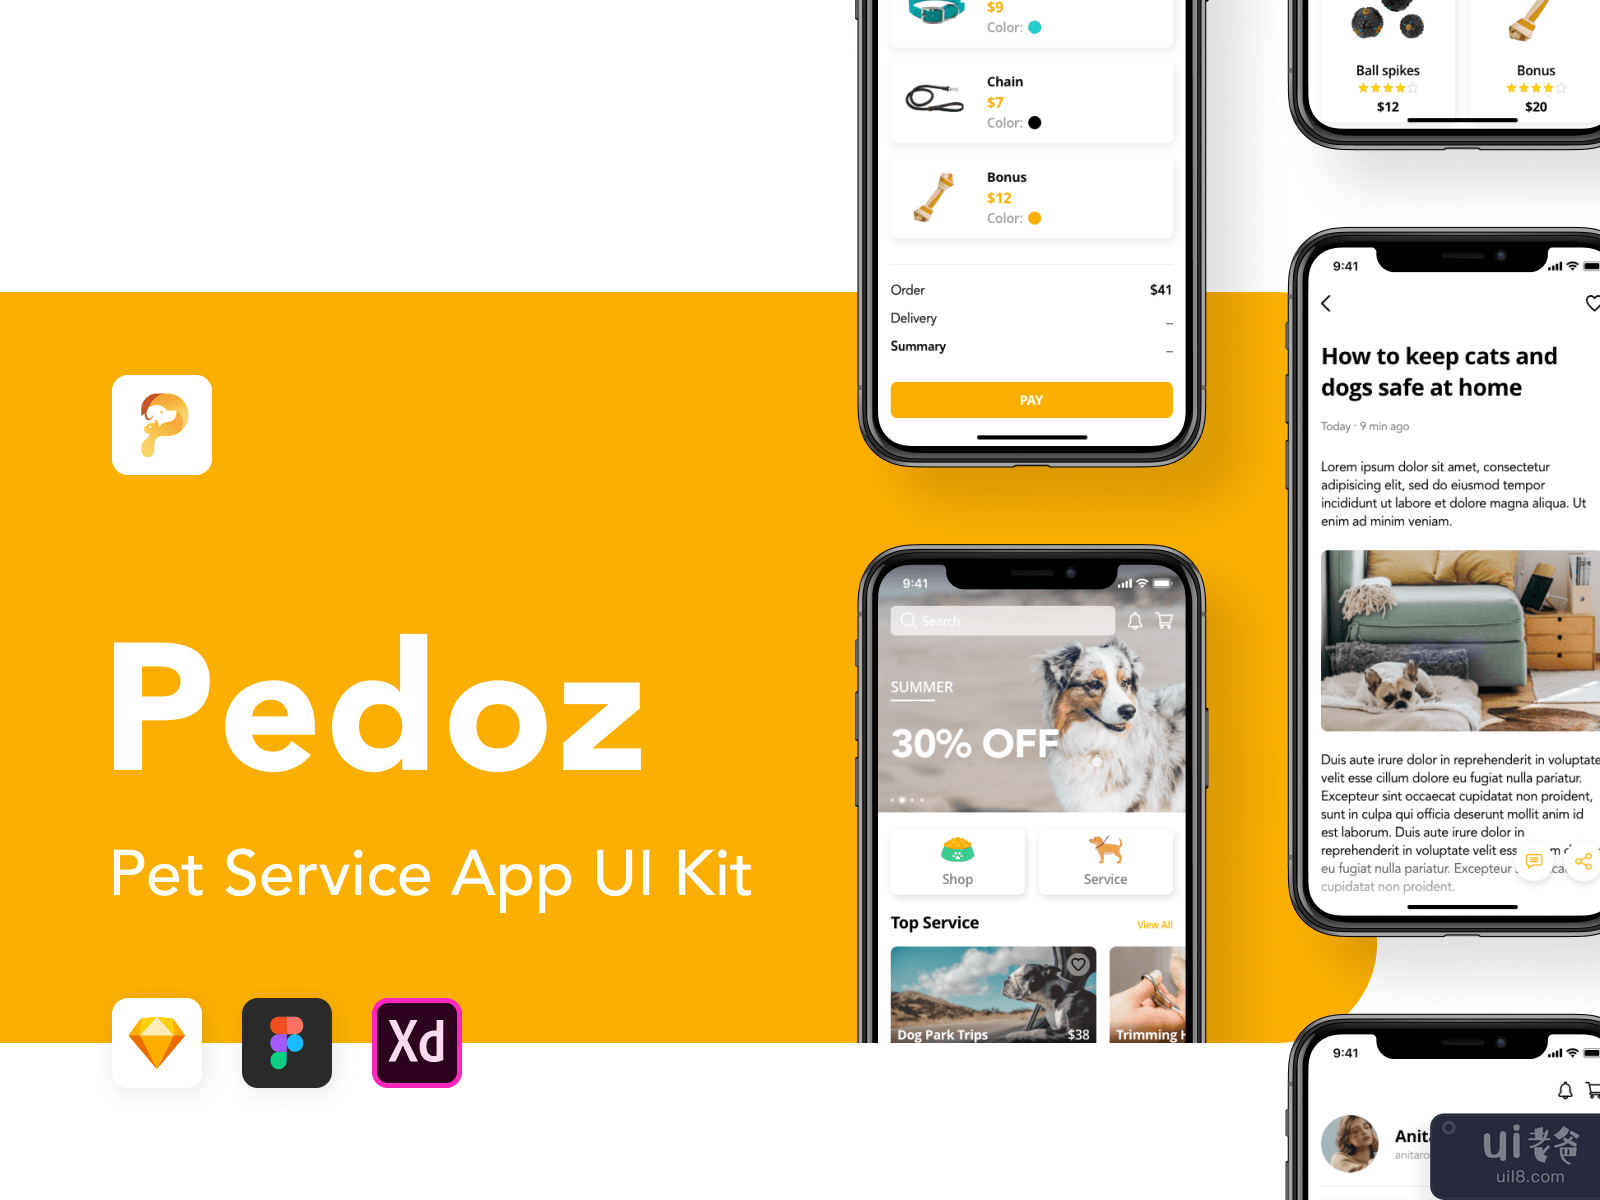 Pedoz - Pet Service App UI Kit (Part 4)